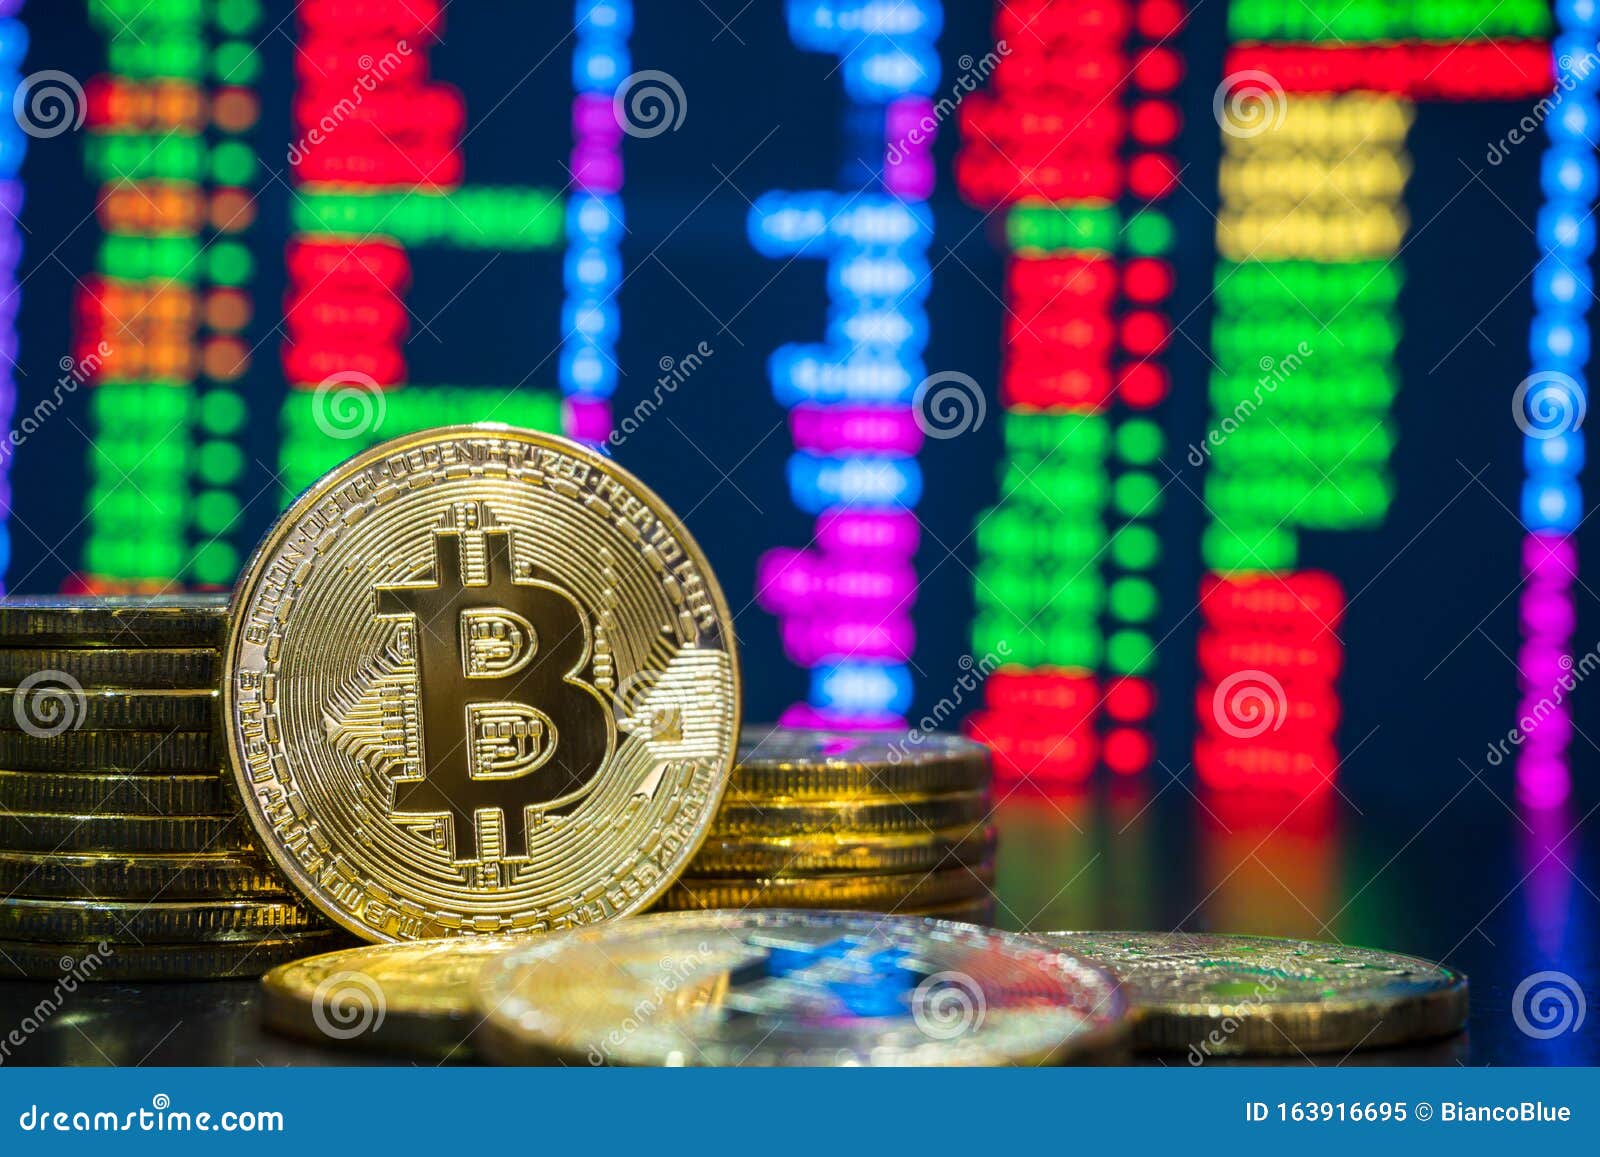 bitcoin and markets